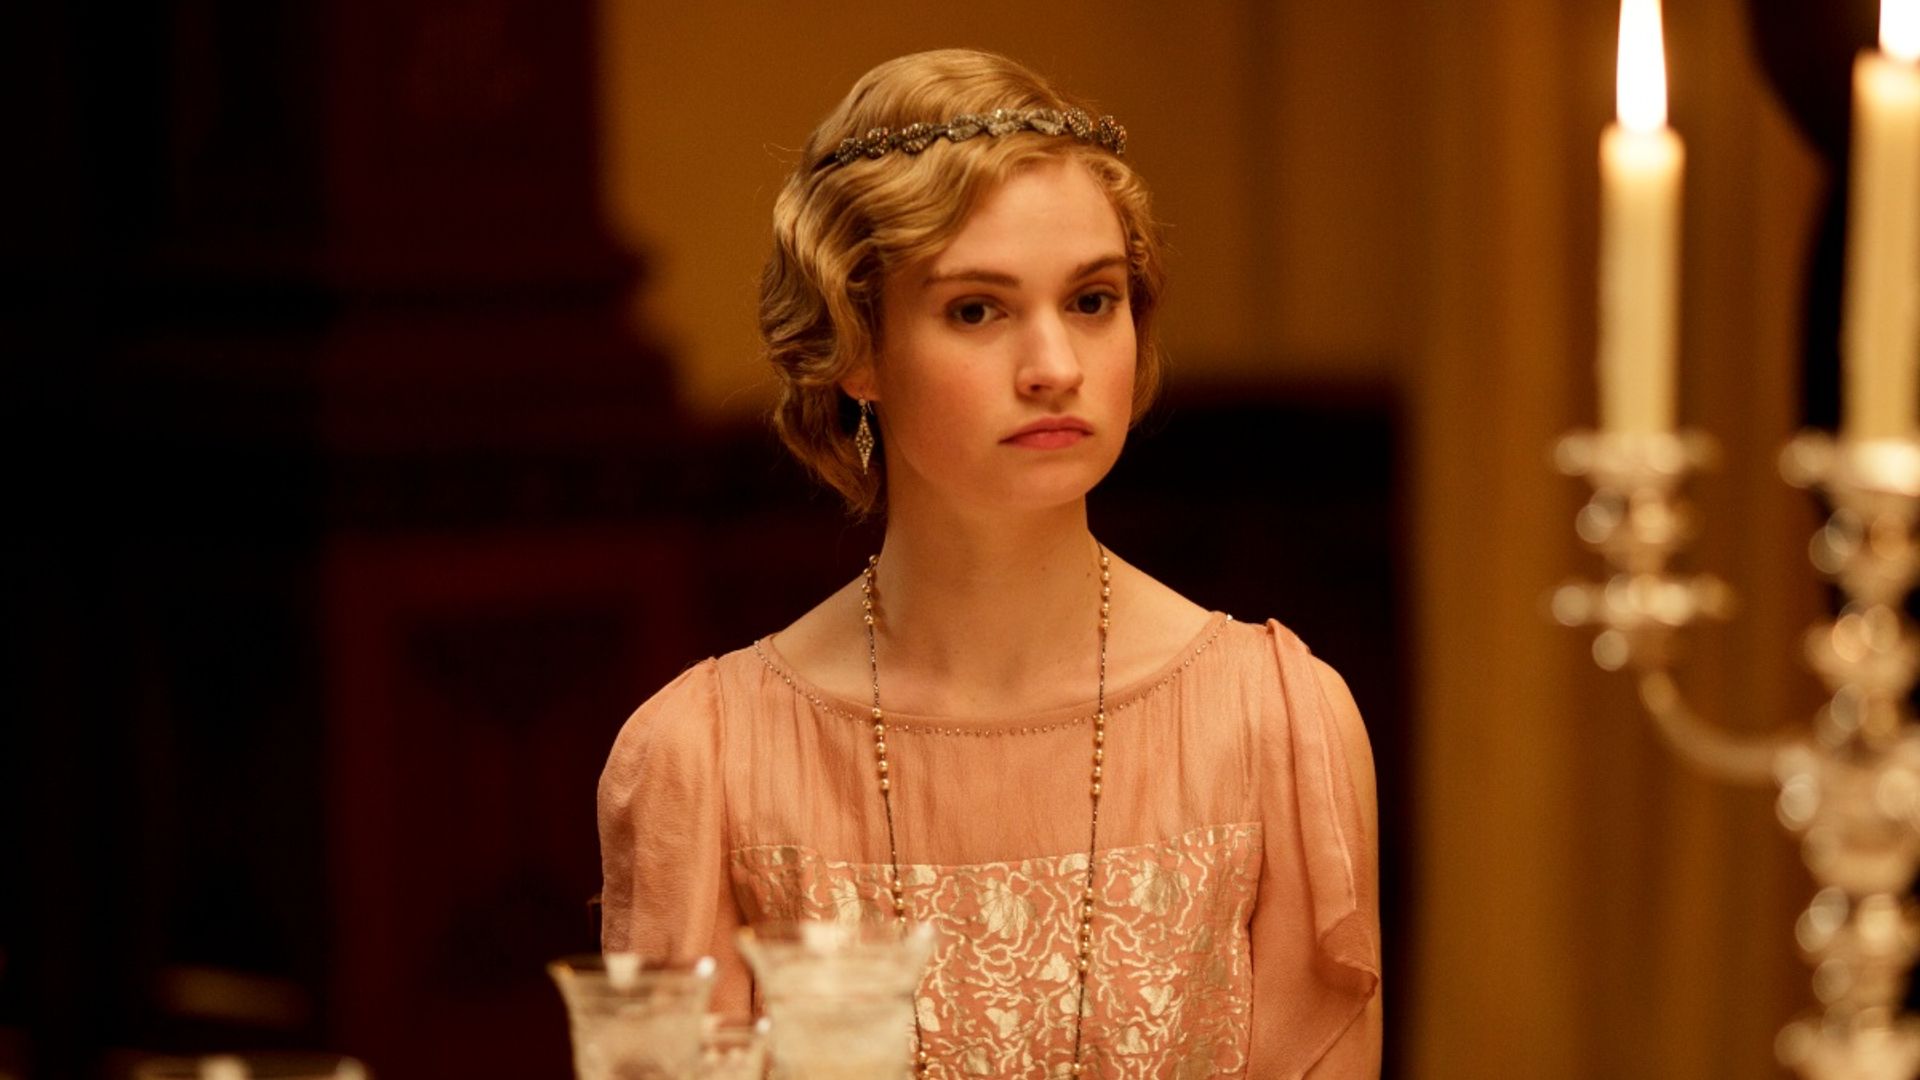 Meet the New Cinderella, 'Downton' Actress Lily James